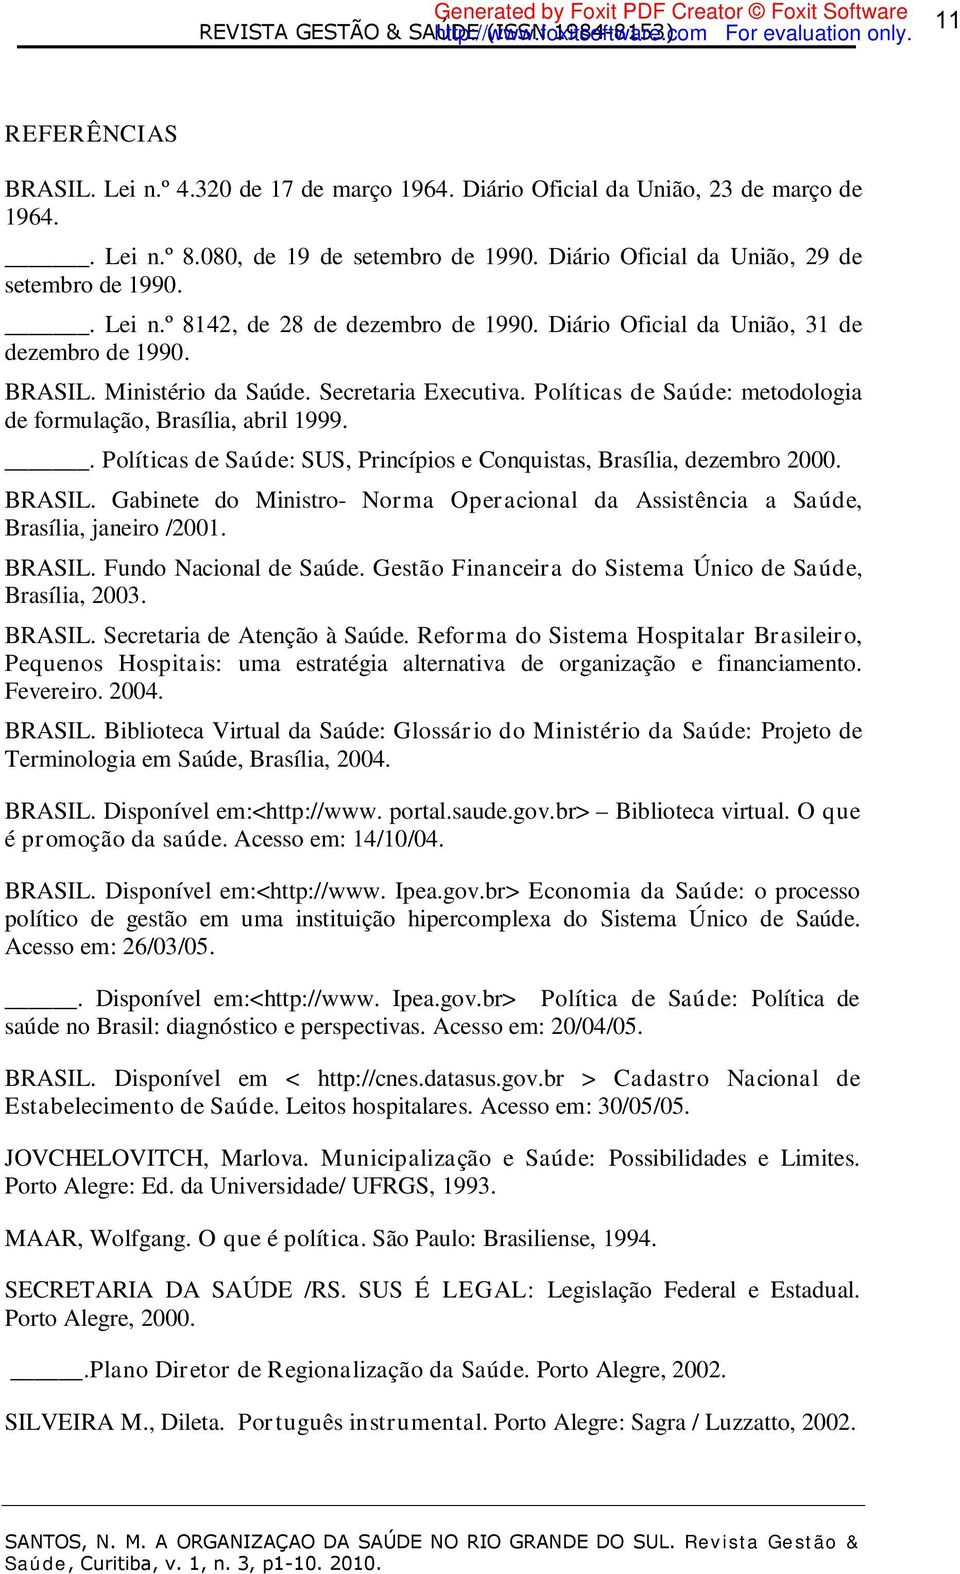 Políticas de Saúde: metodologia de formulação, Brasília, abril 1999.. Políticas de Saúde: SUS, Princípios e Conquistas, Brasília, dezembro 2000. BRASIL.